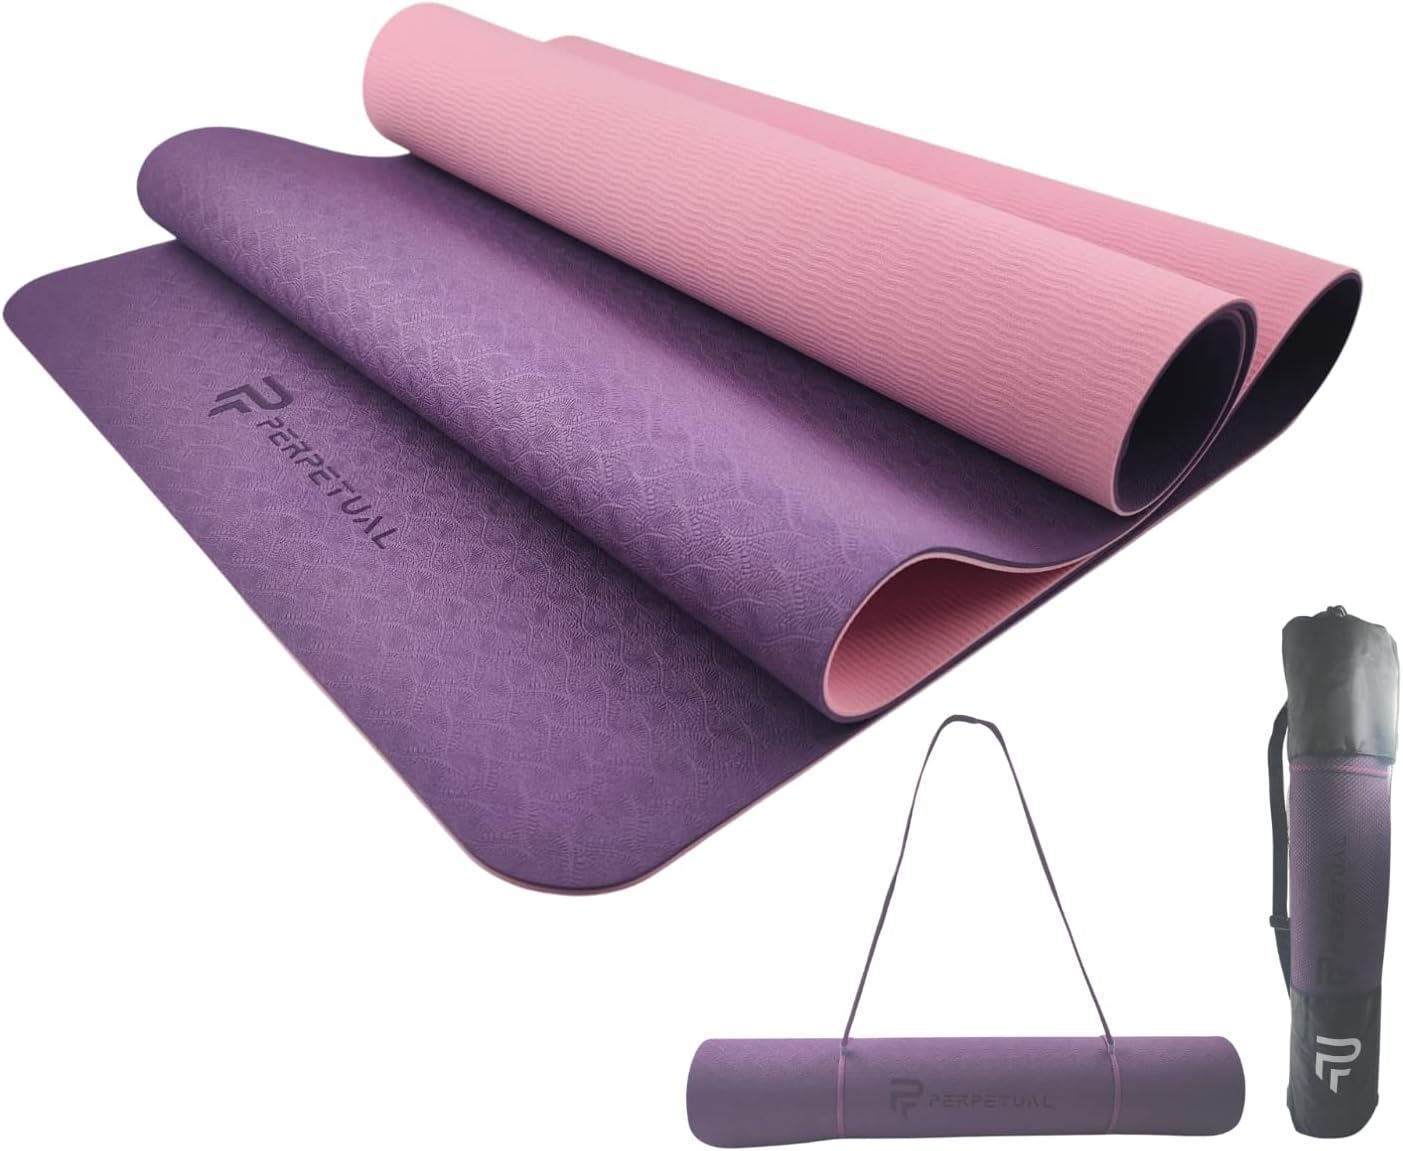 Esterilla de Yoga Gruesa y Antideslizante Perpetual (10 mm) - Perpetual. Fitness